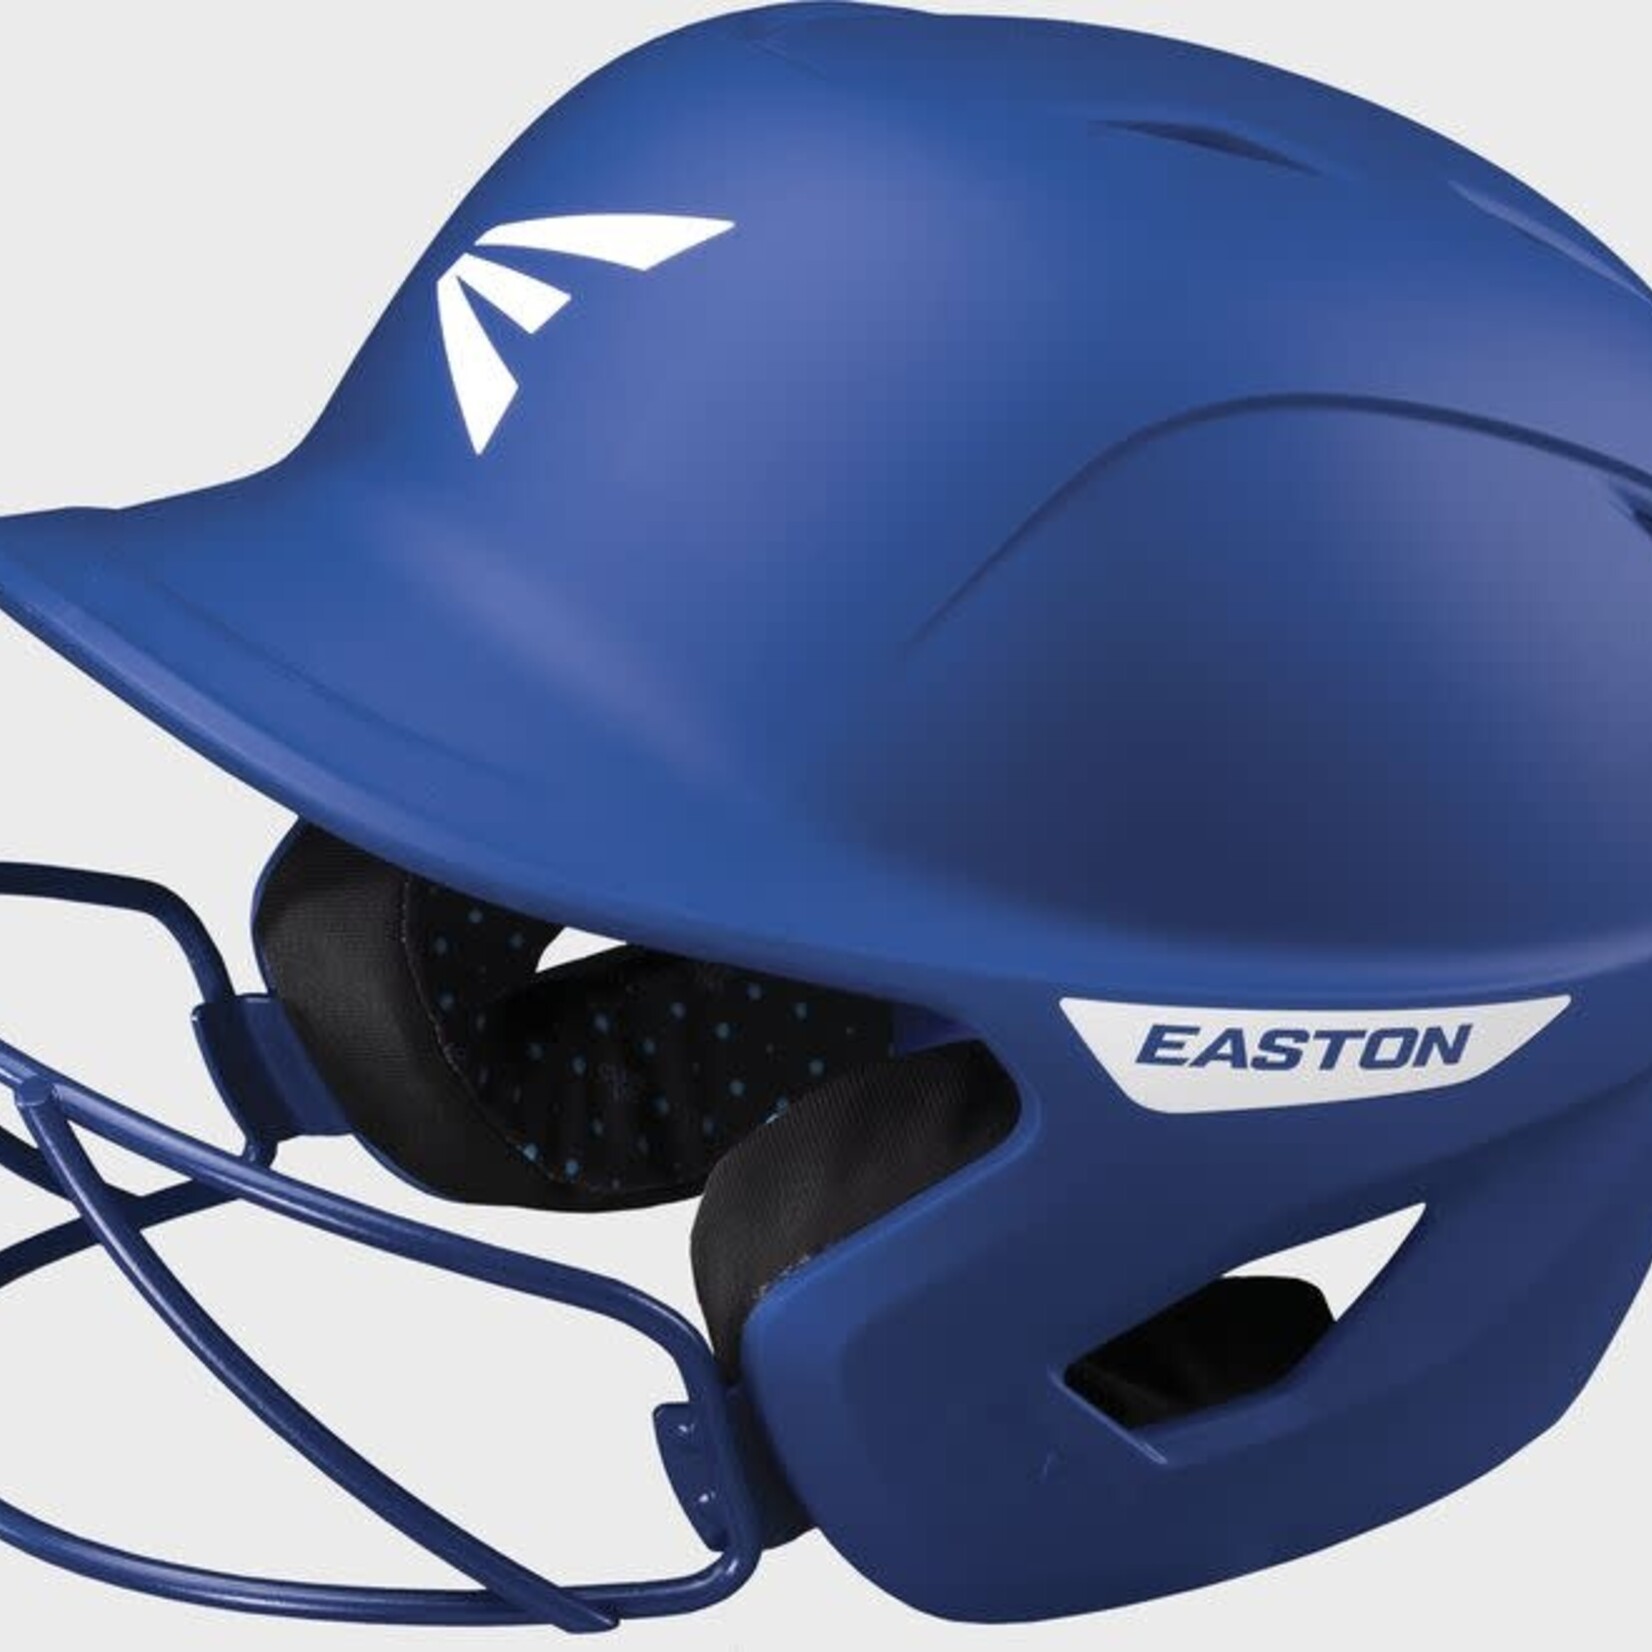 Easton Easton Baseball Batting Helmet, Ghost w/ Fastpitch Mask